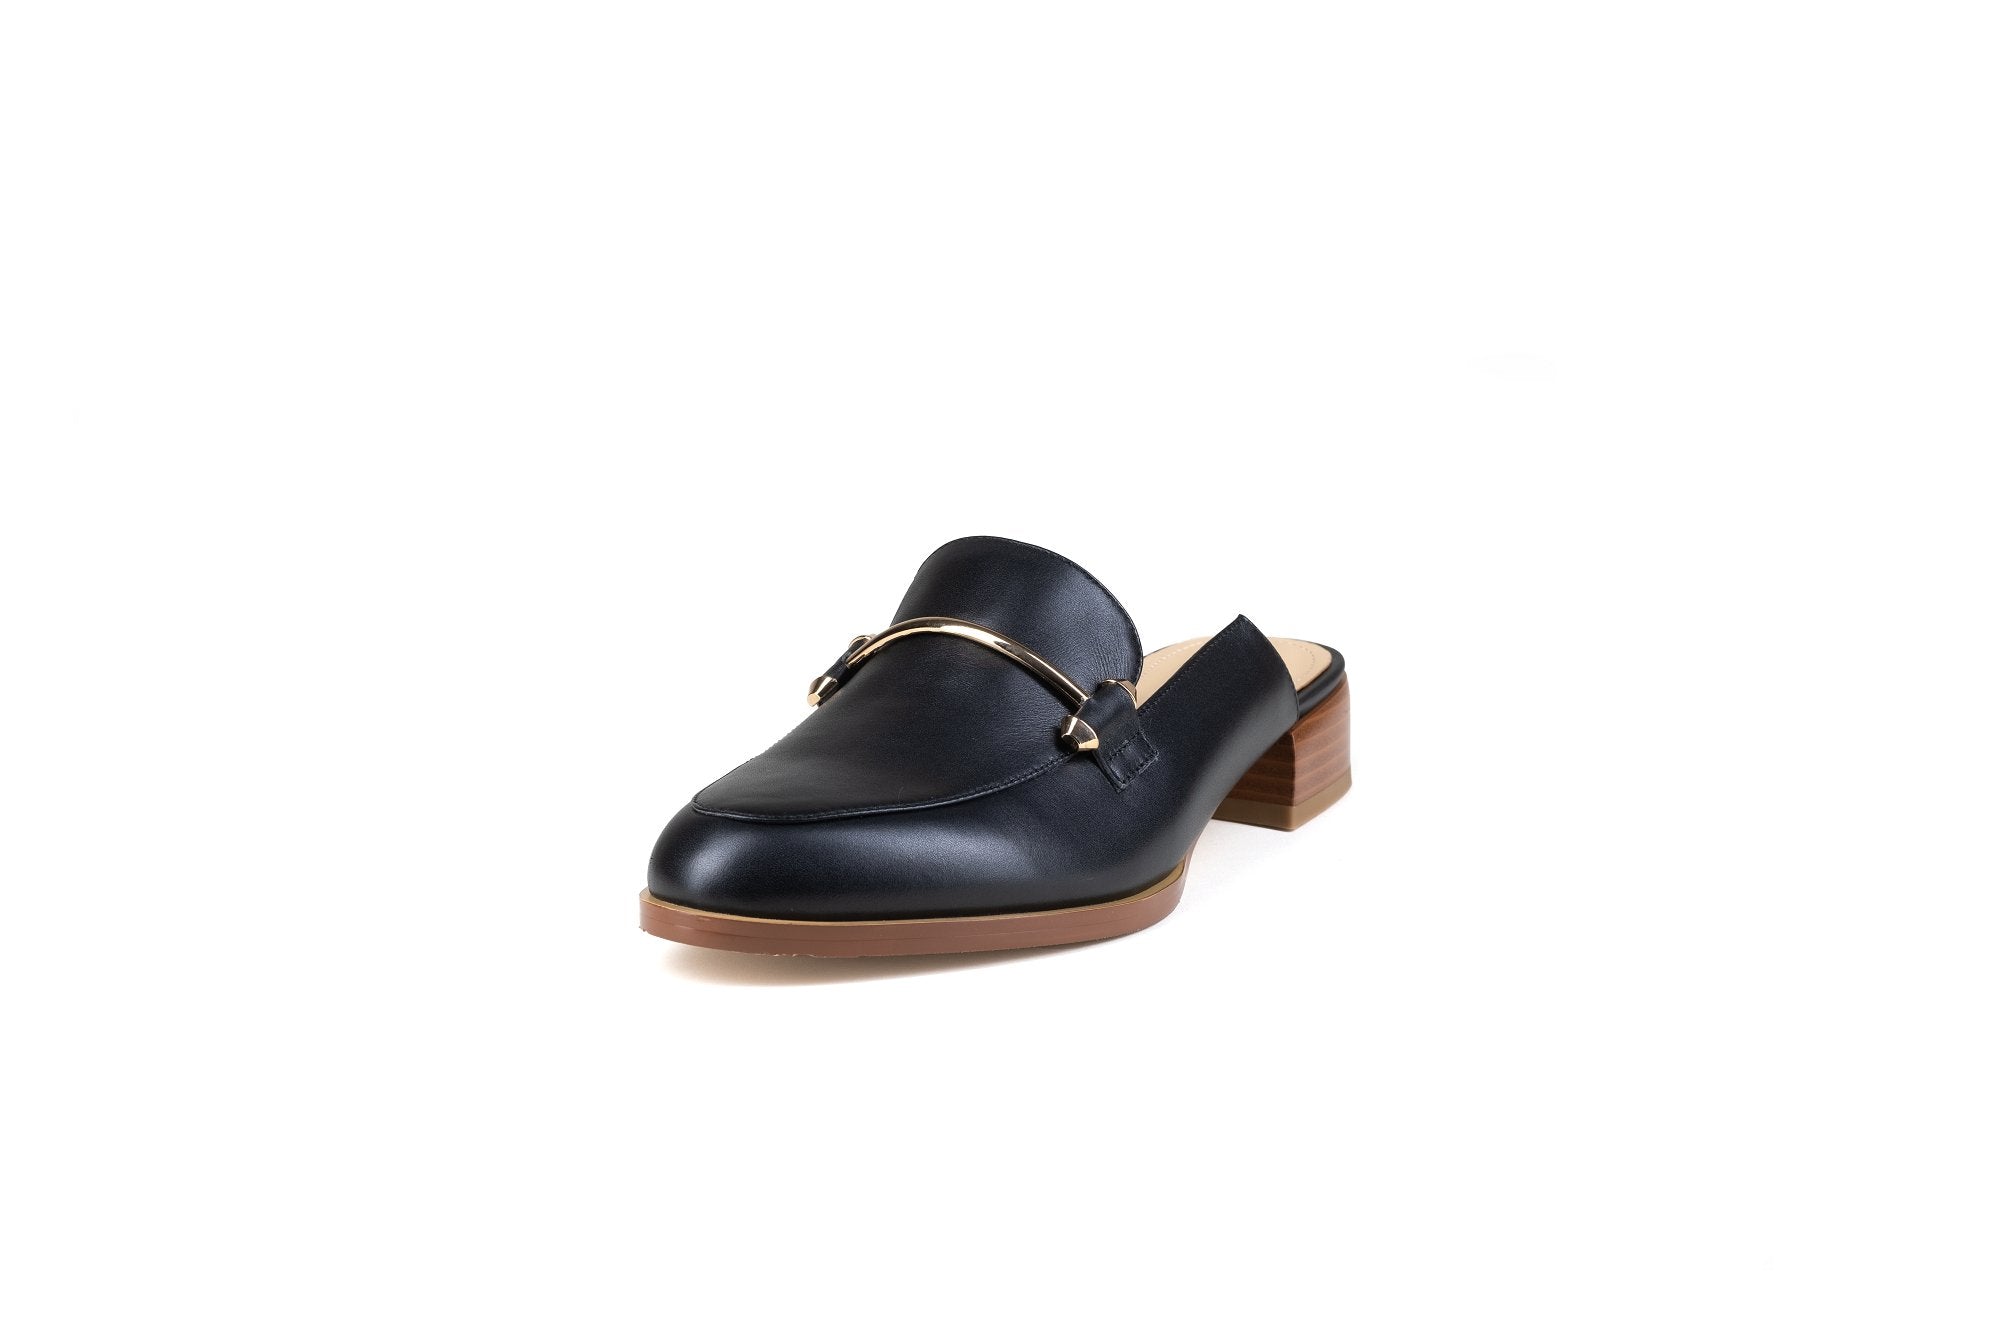 Aria Flat Mule Black Flats by Sole Shoes NZ F22-36